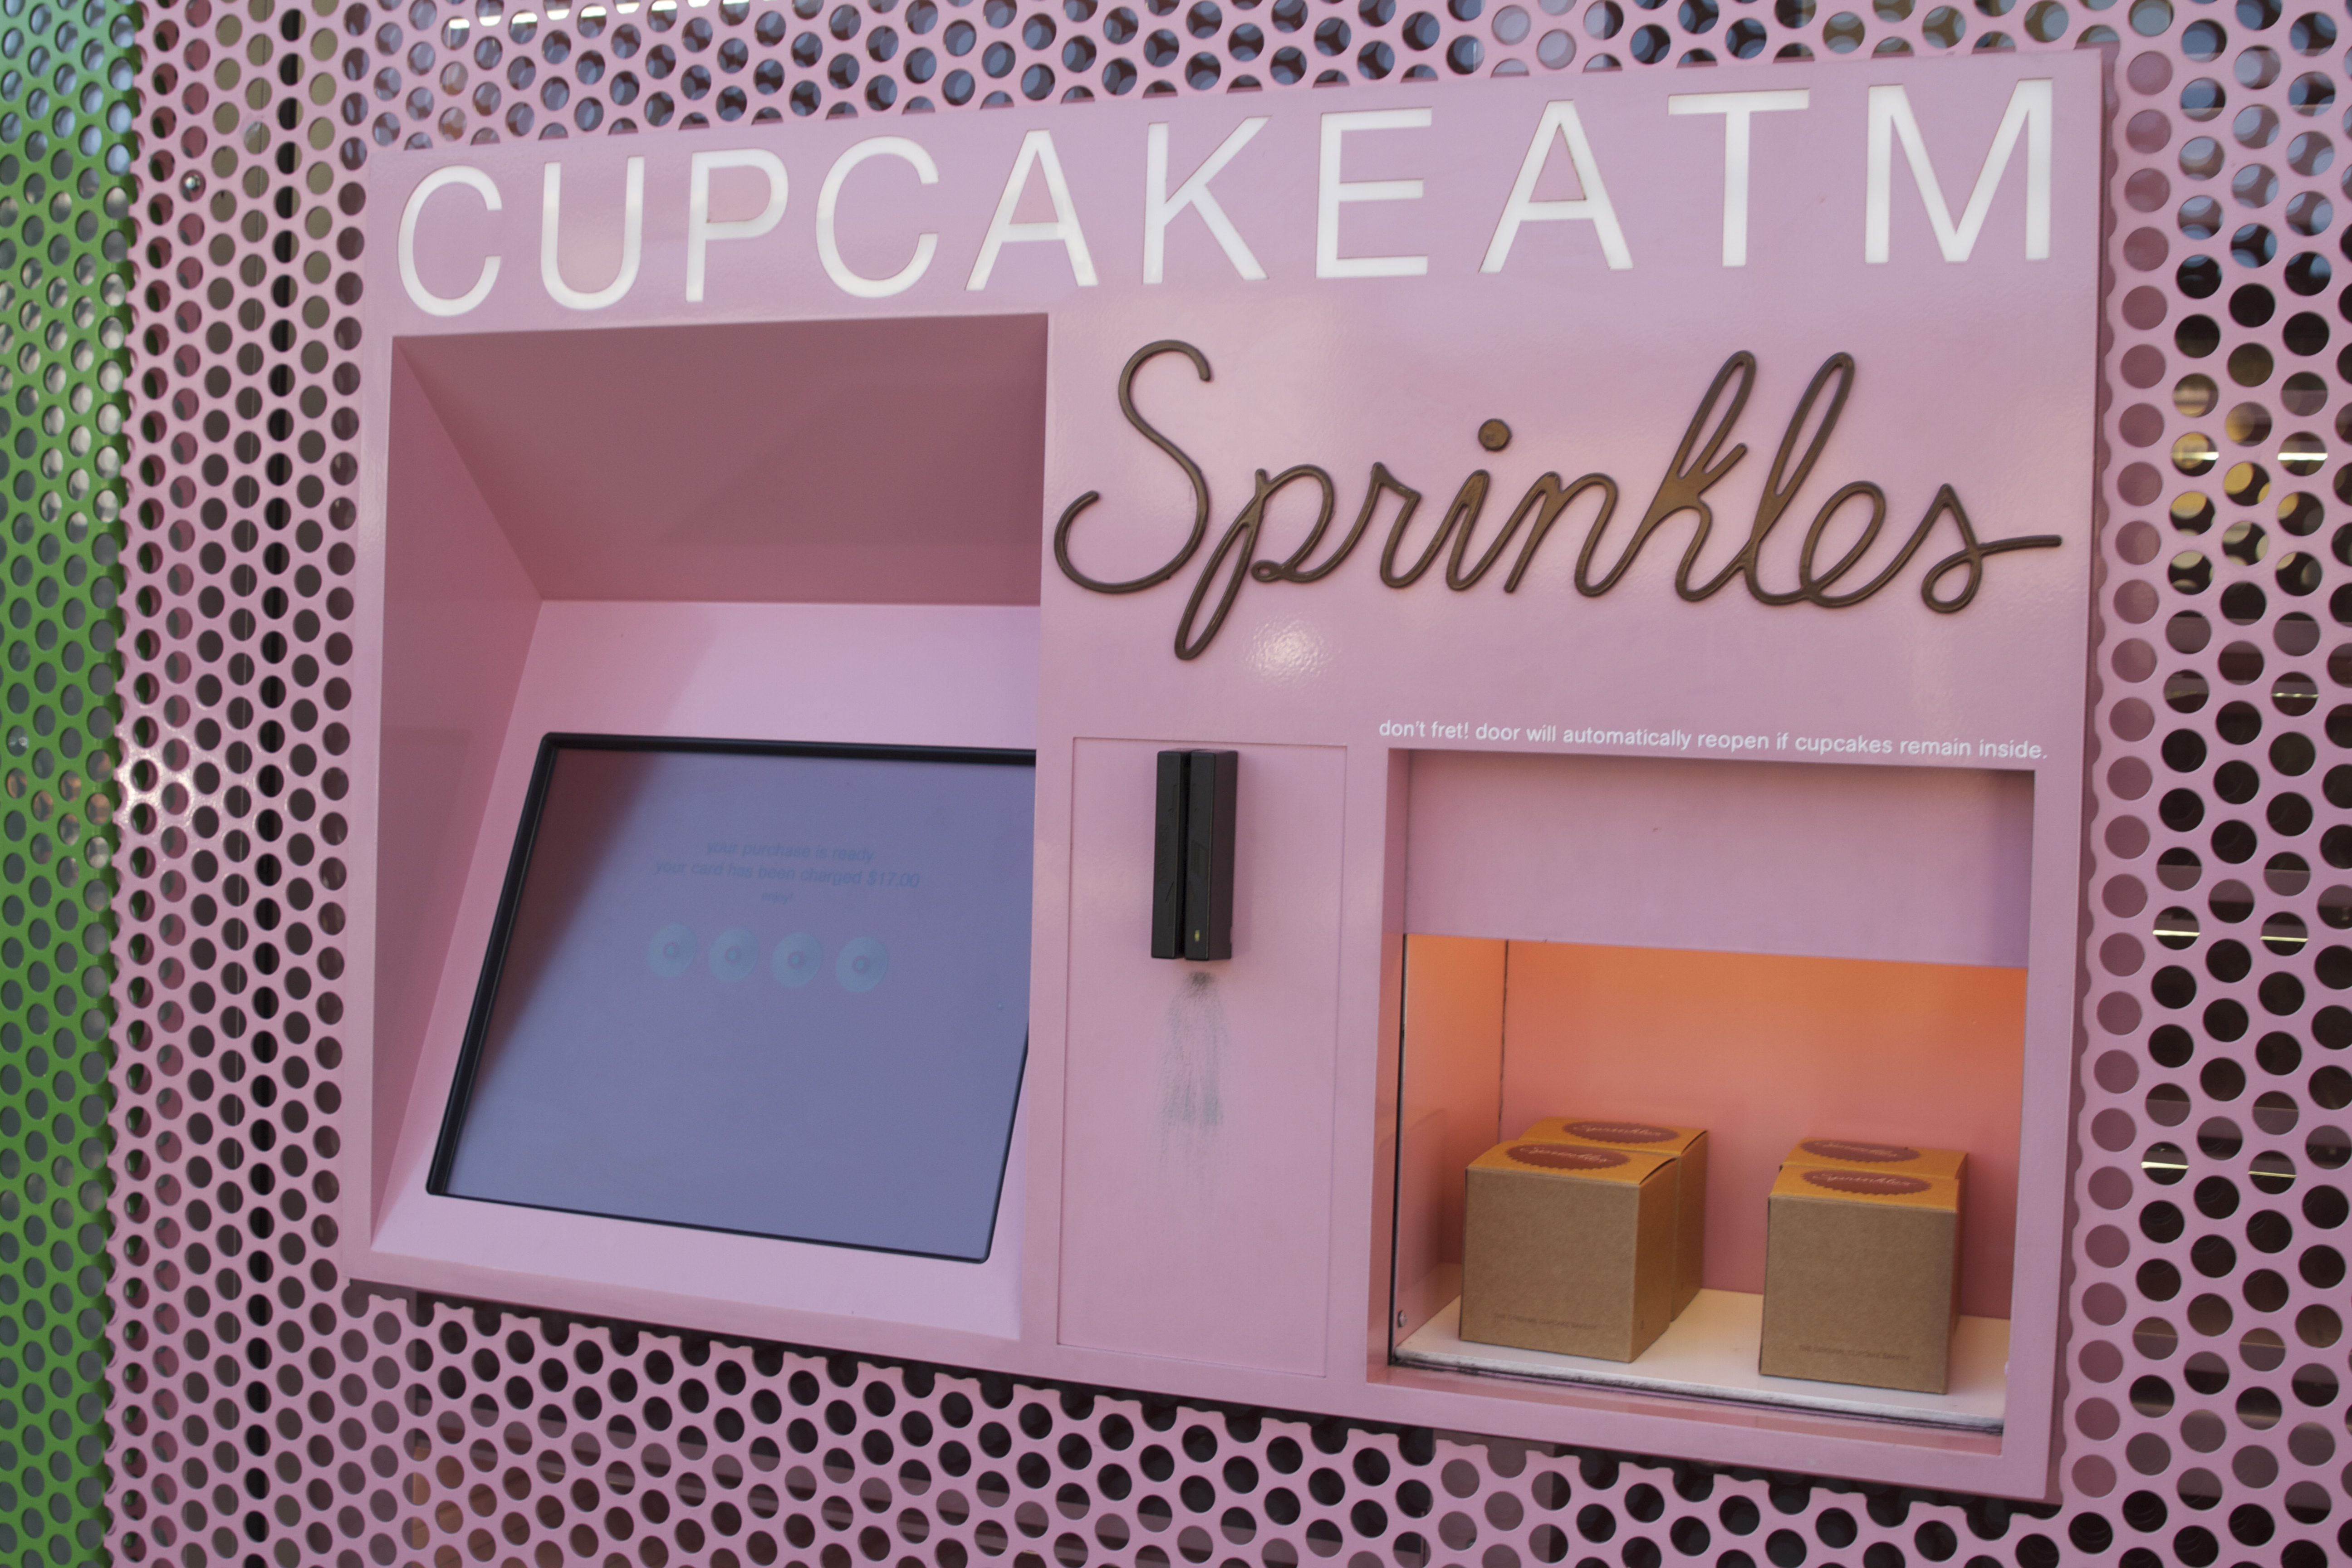 Sprinkles’ cupcake ATM